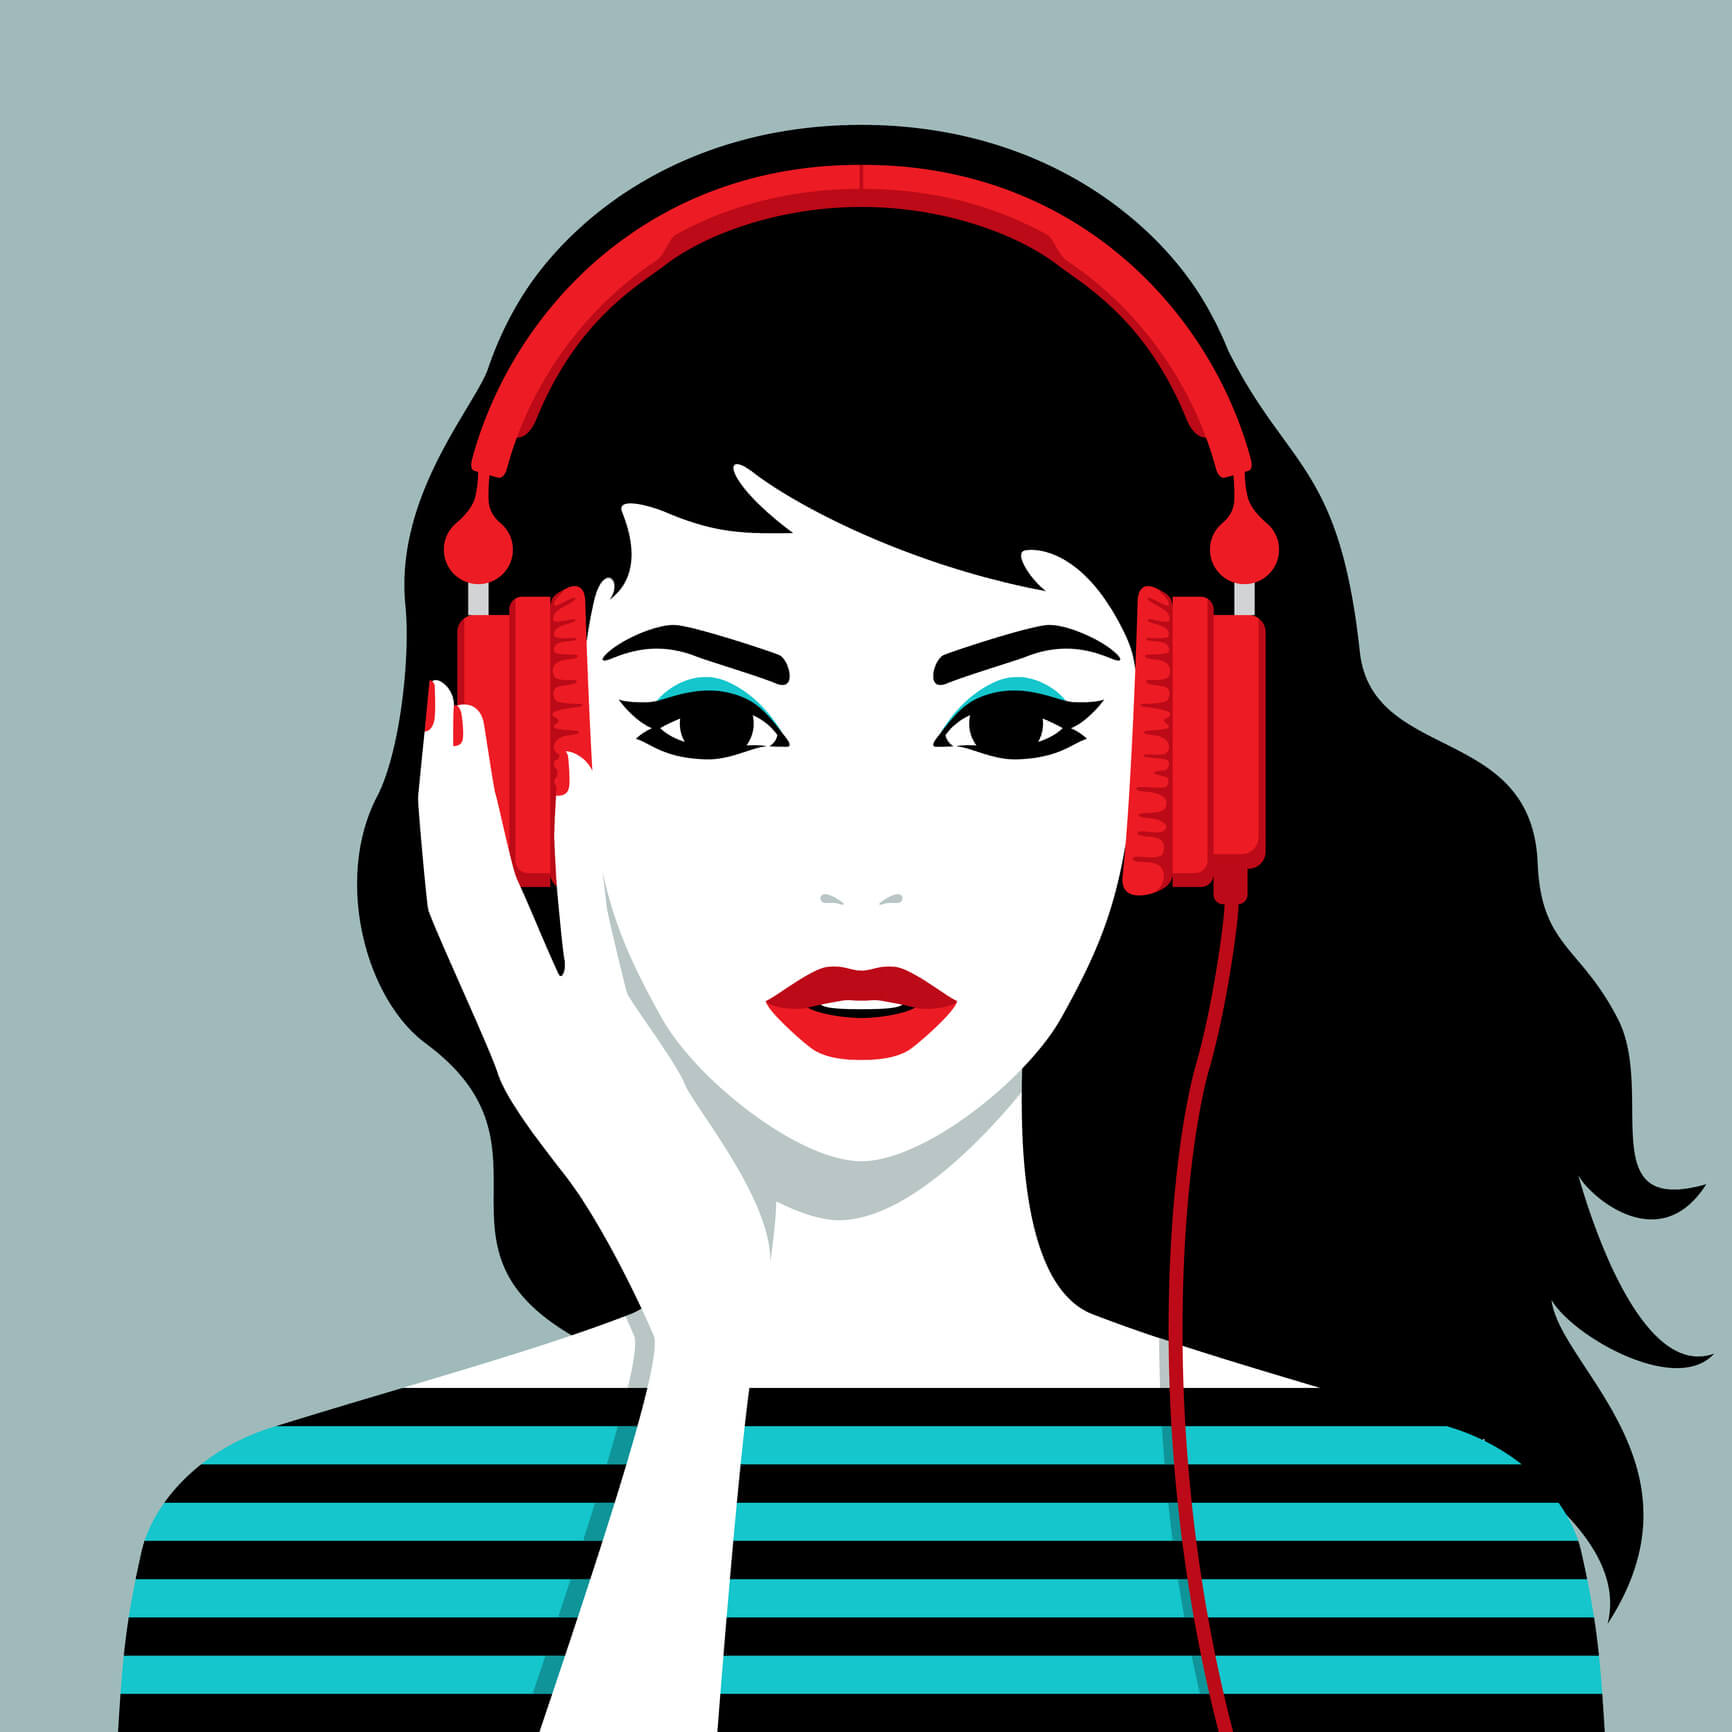 Girl with headphones on her head